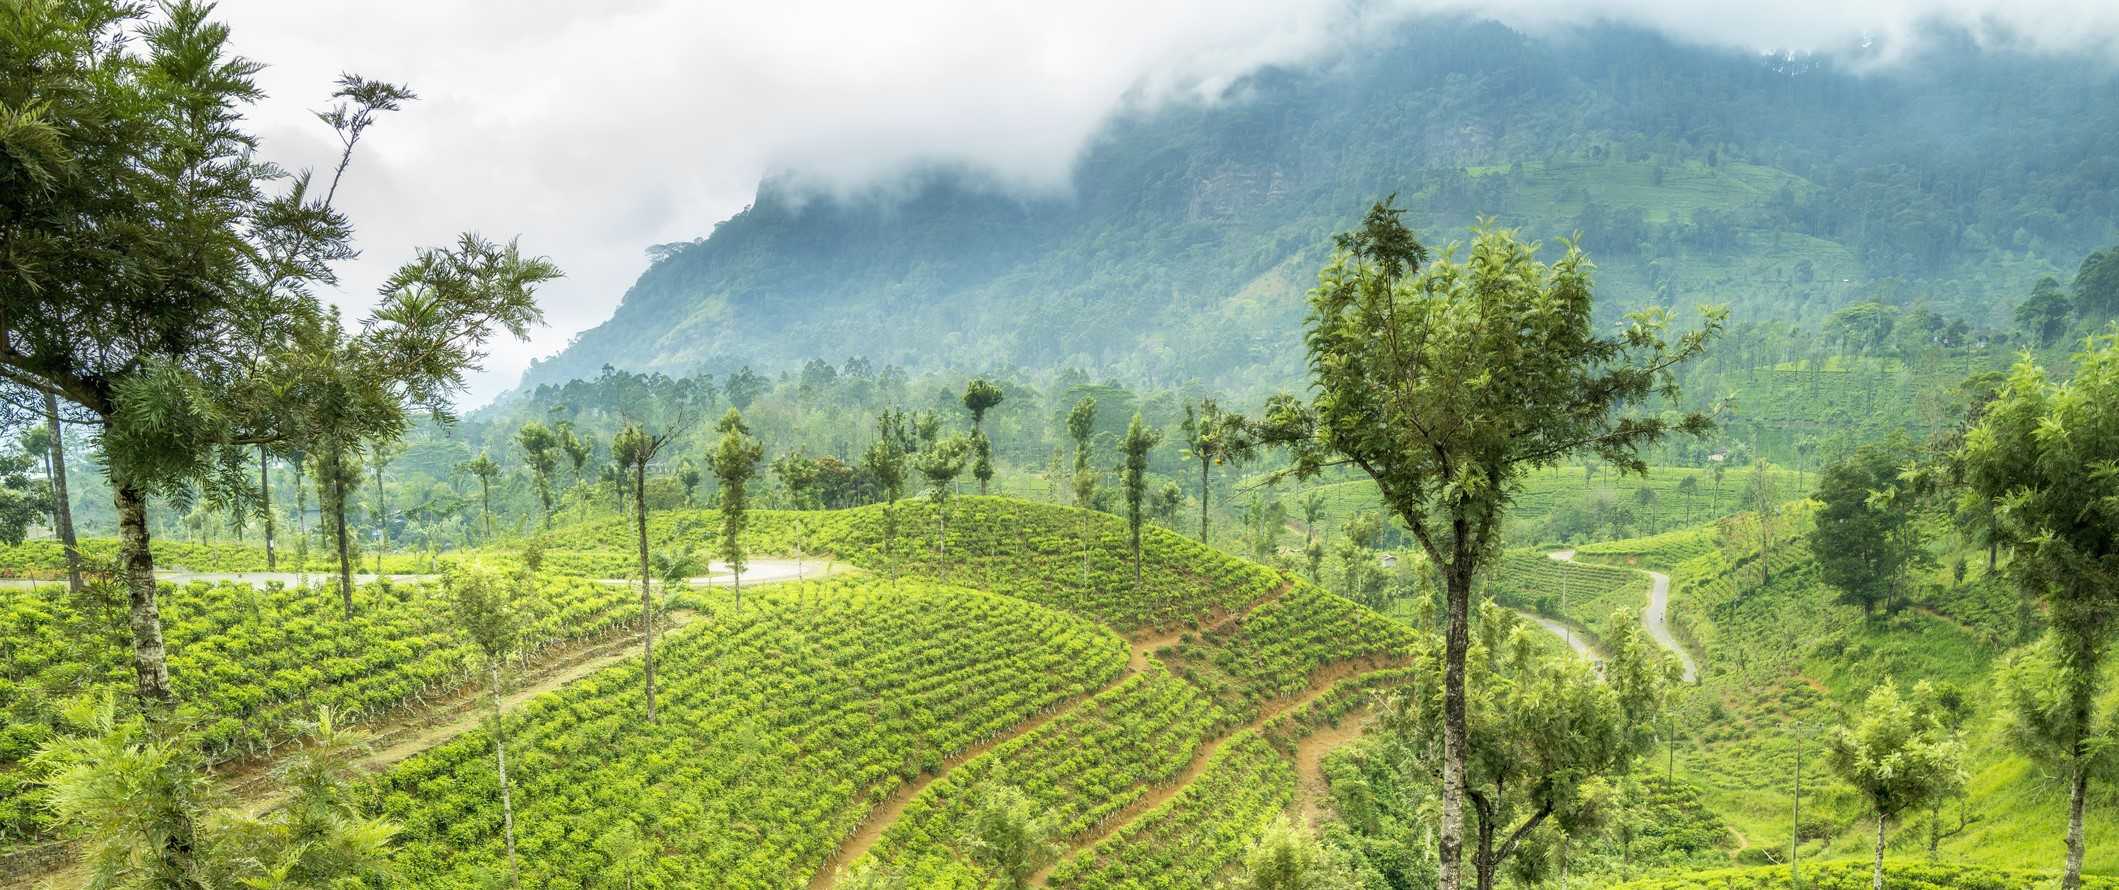 The lush hills of a tea plantation in Sri Lanka